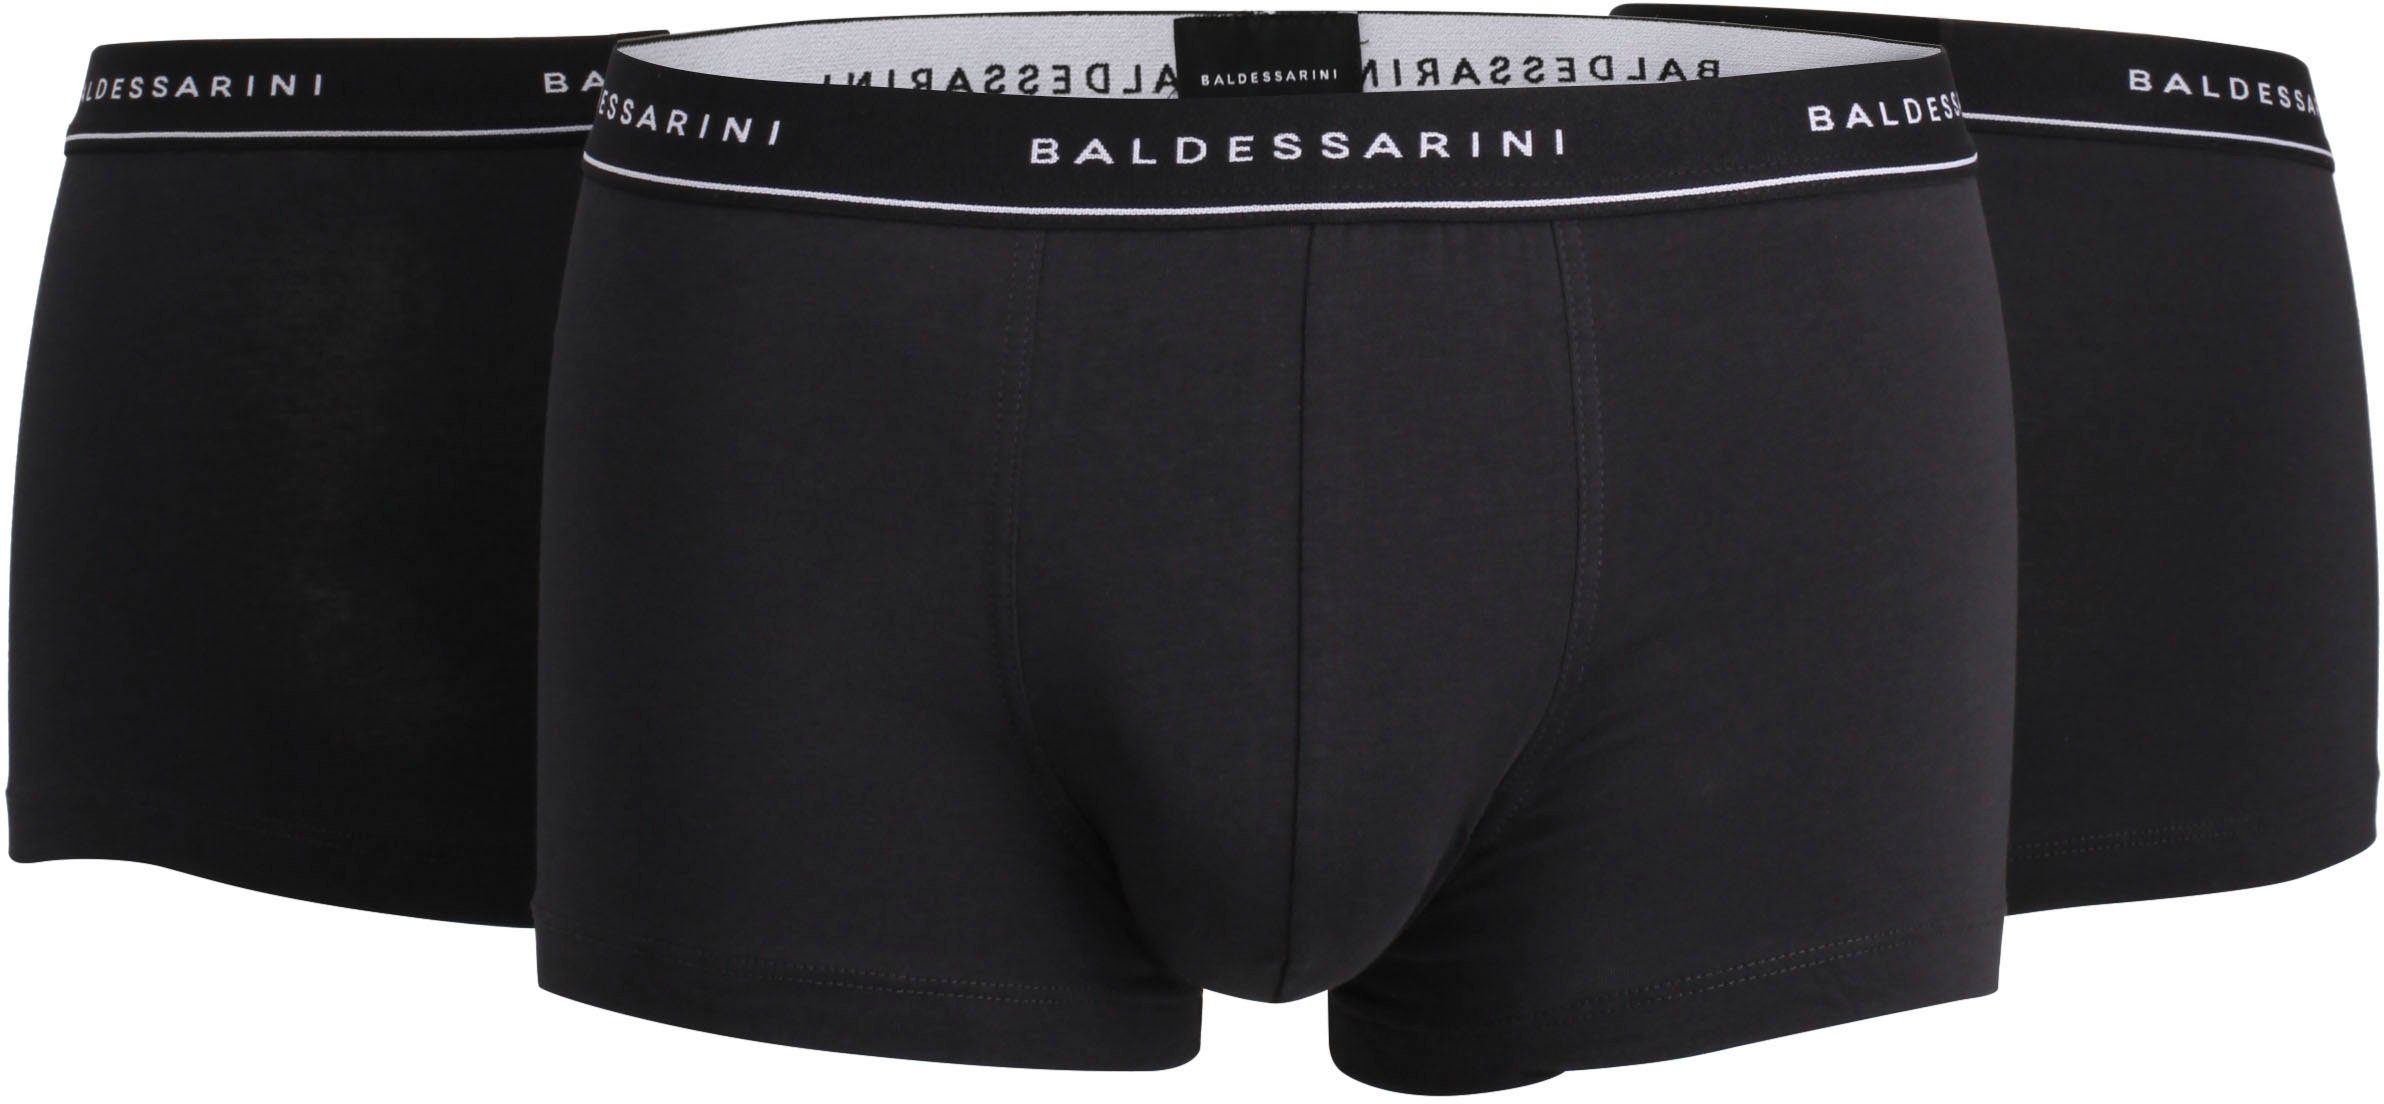 BALDESSARINI Retro Pants Short Pants 3er Pac schwarz-dunkel-uni